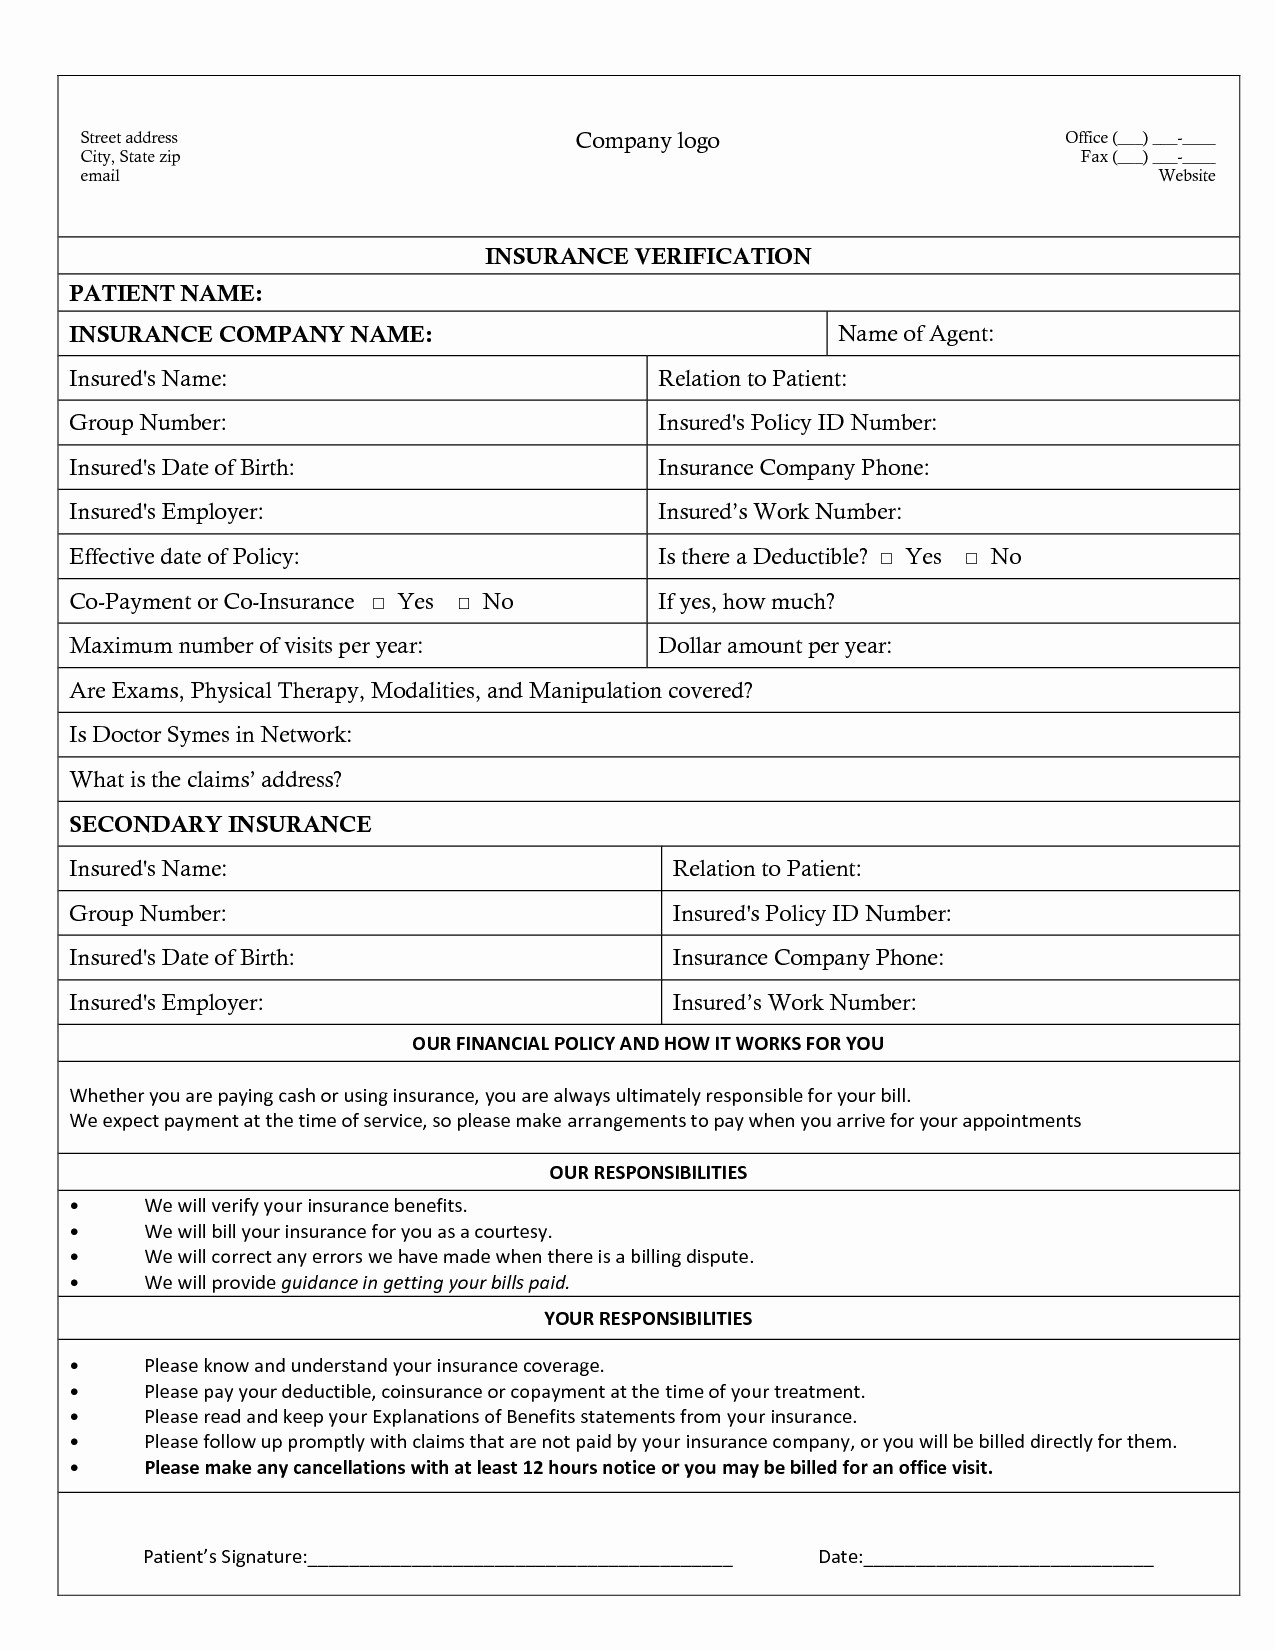 38 Unique Collection Of Dental Insurance Verification Form Template Document